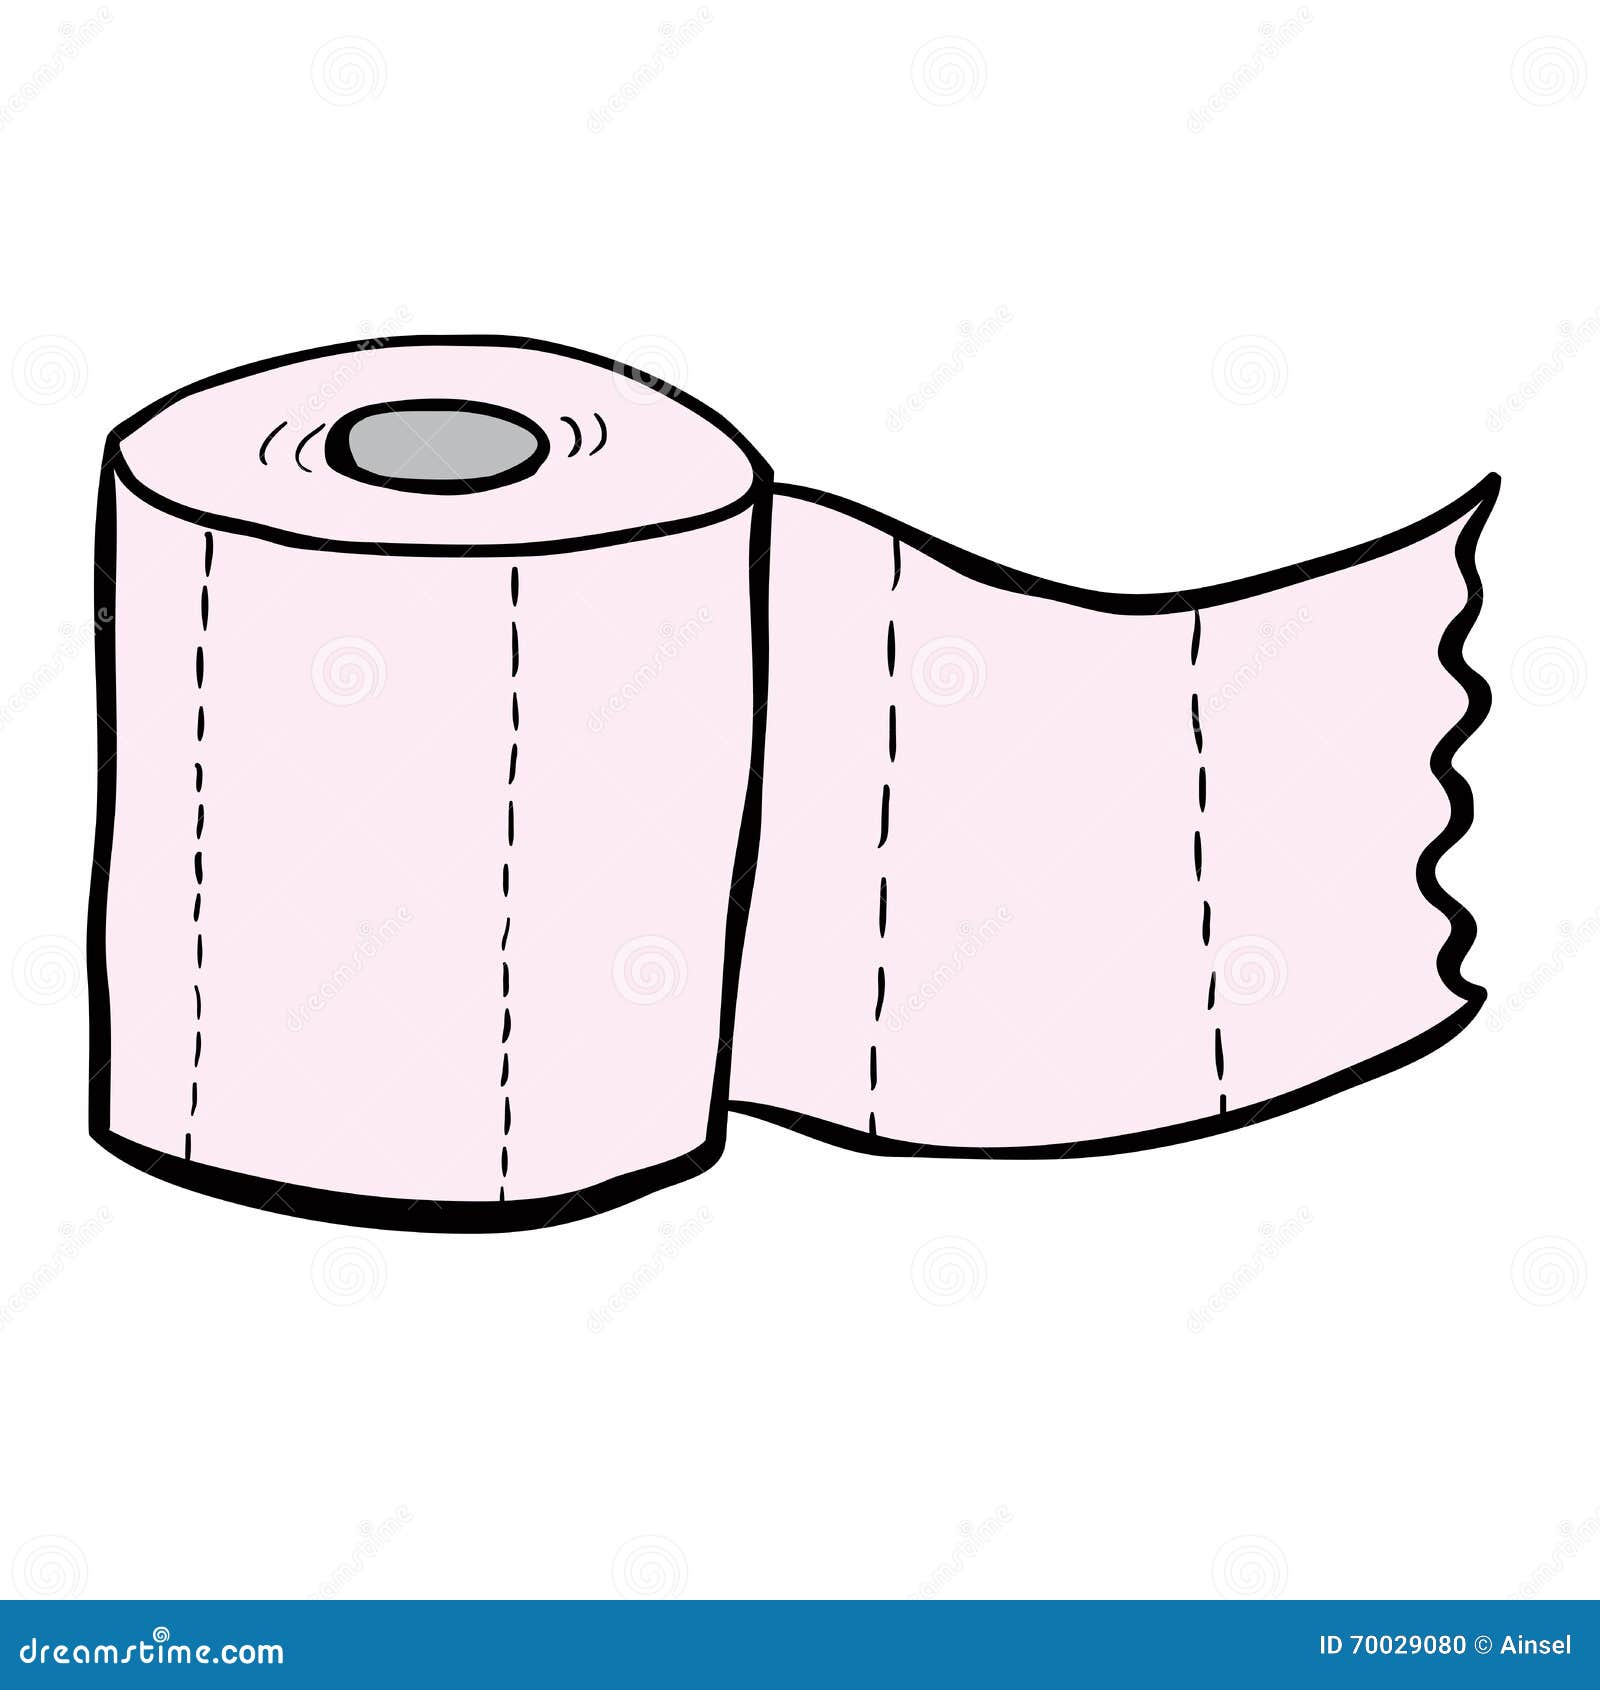 Freehand Drawn Cartoon Toilet Paper Stock Illustration ...